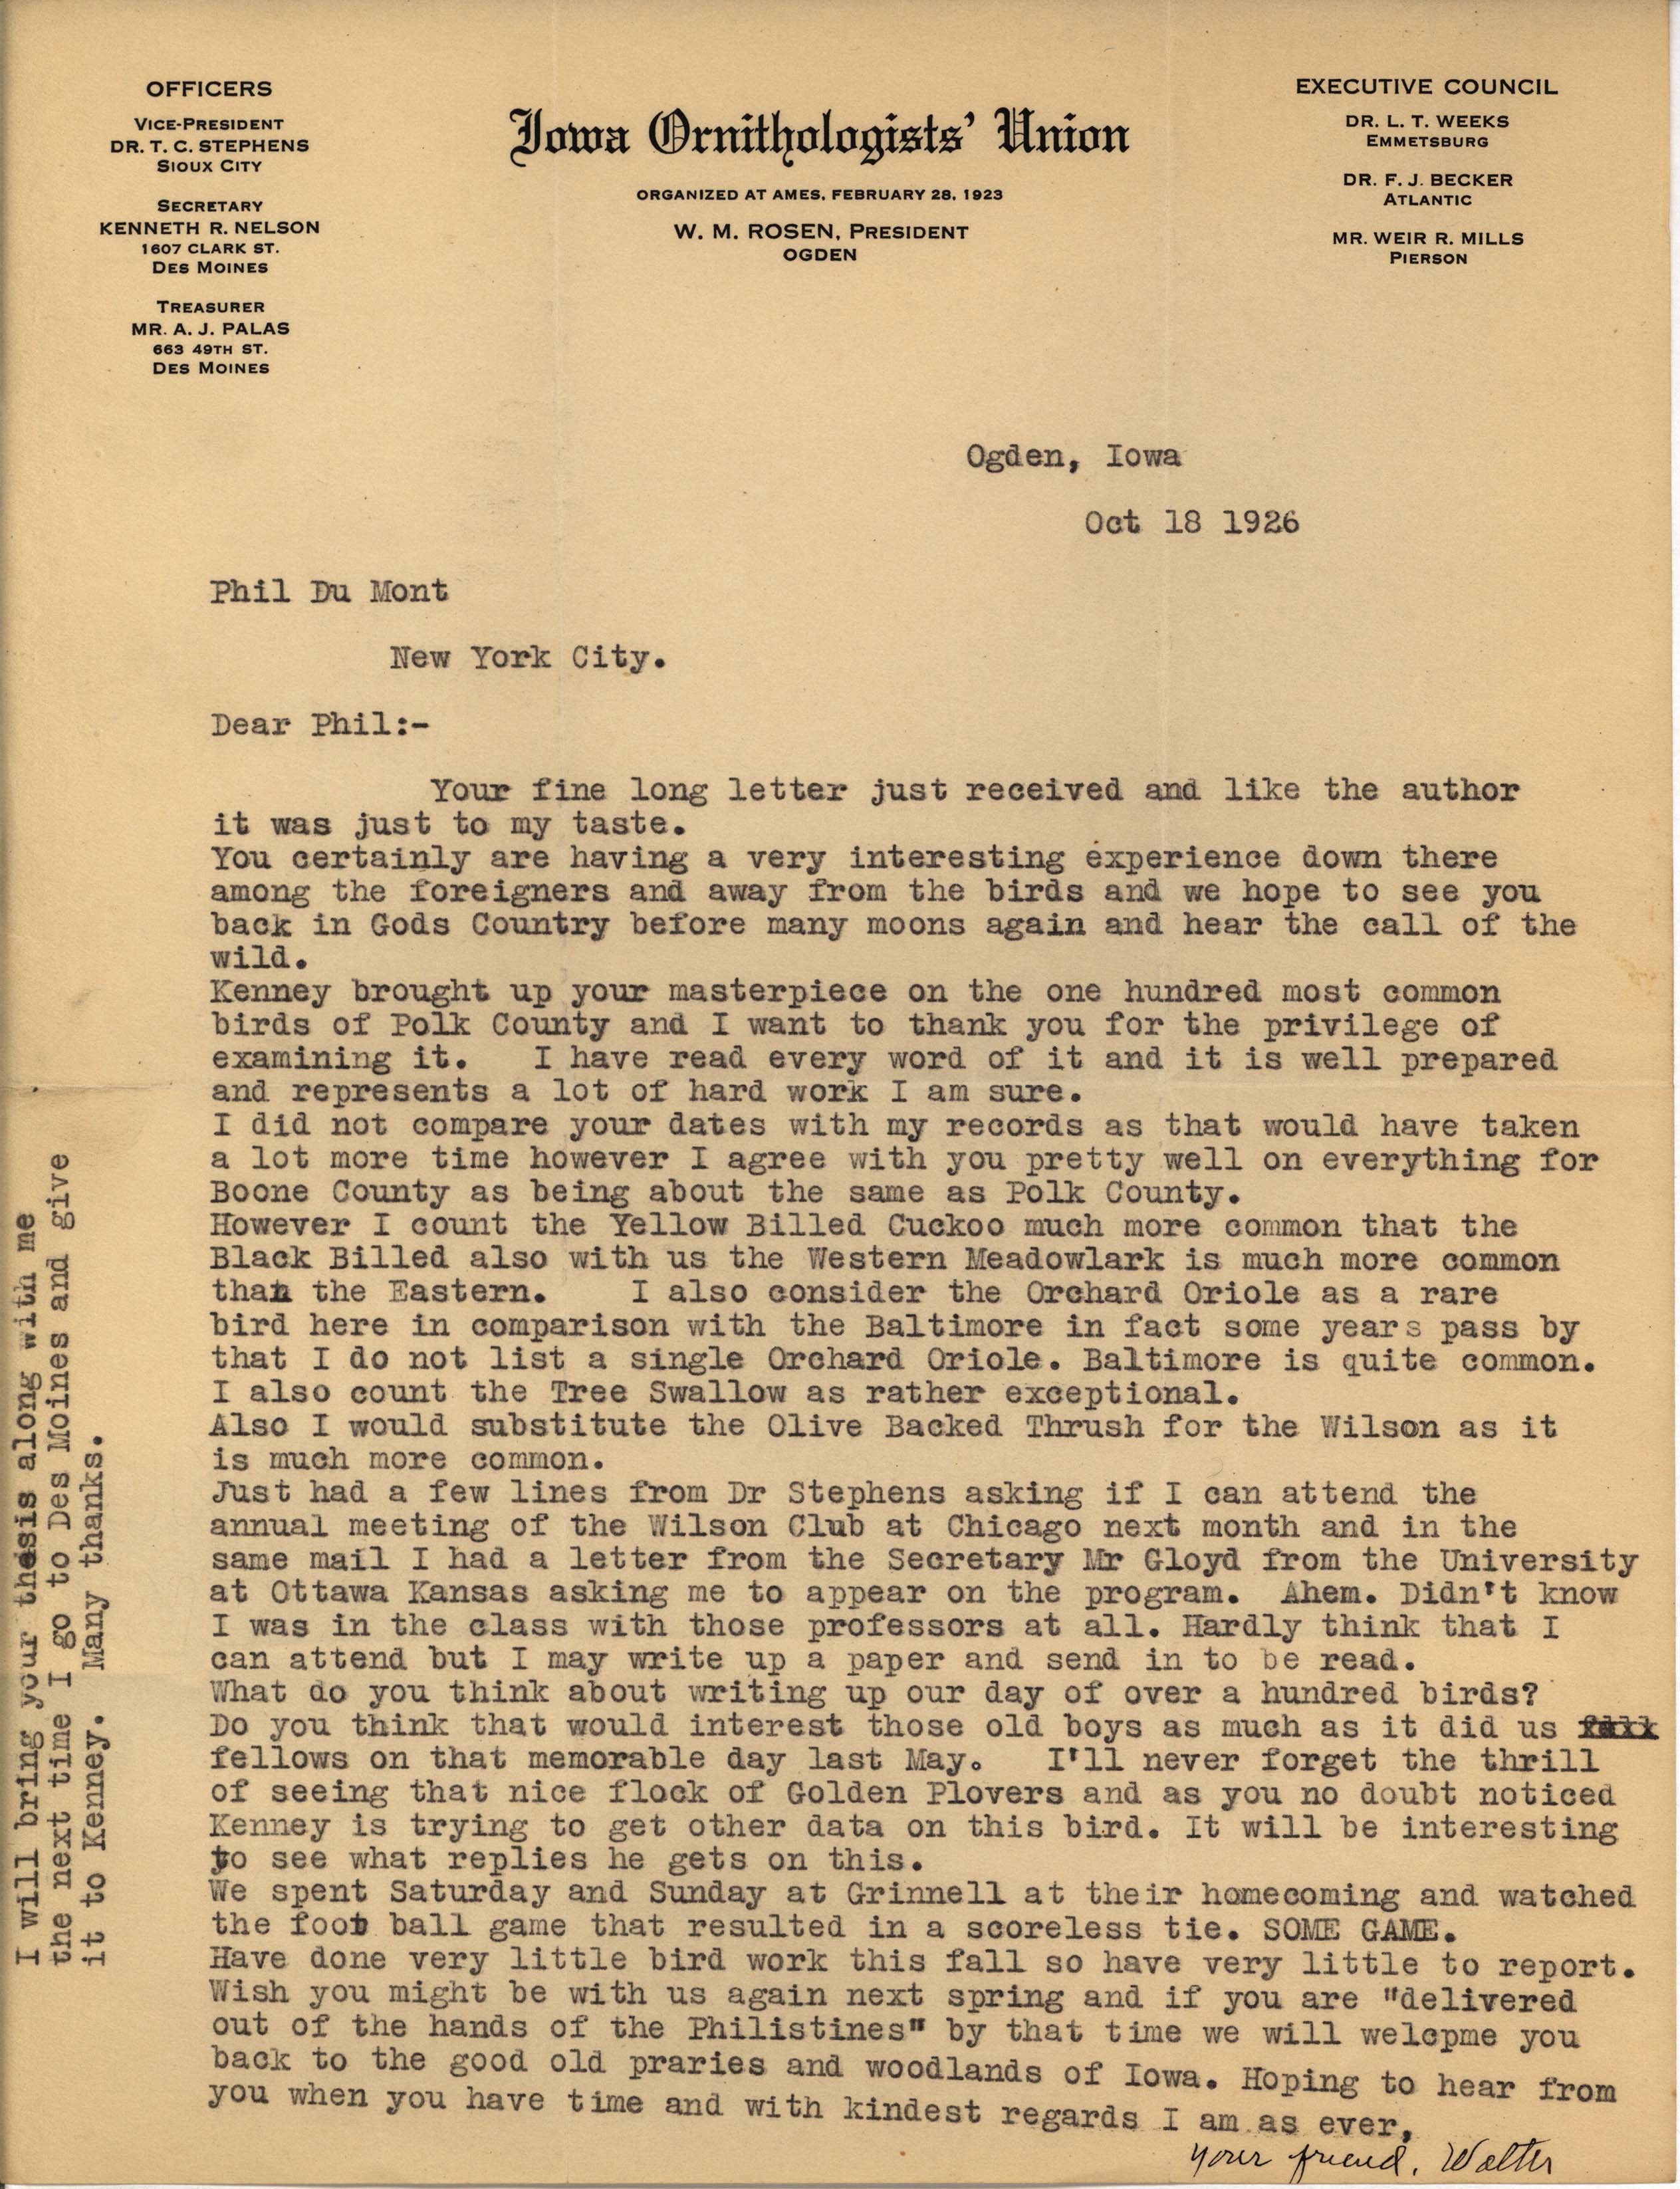 Walter Rosene letter to Philip DuMont regarding common birds of Polk and Boone counties, October 18, 1926